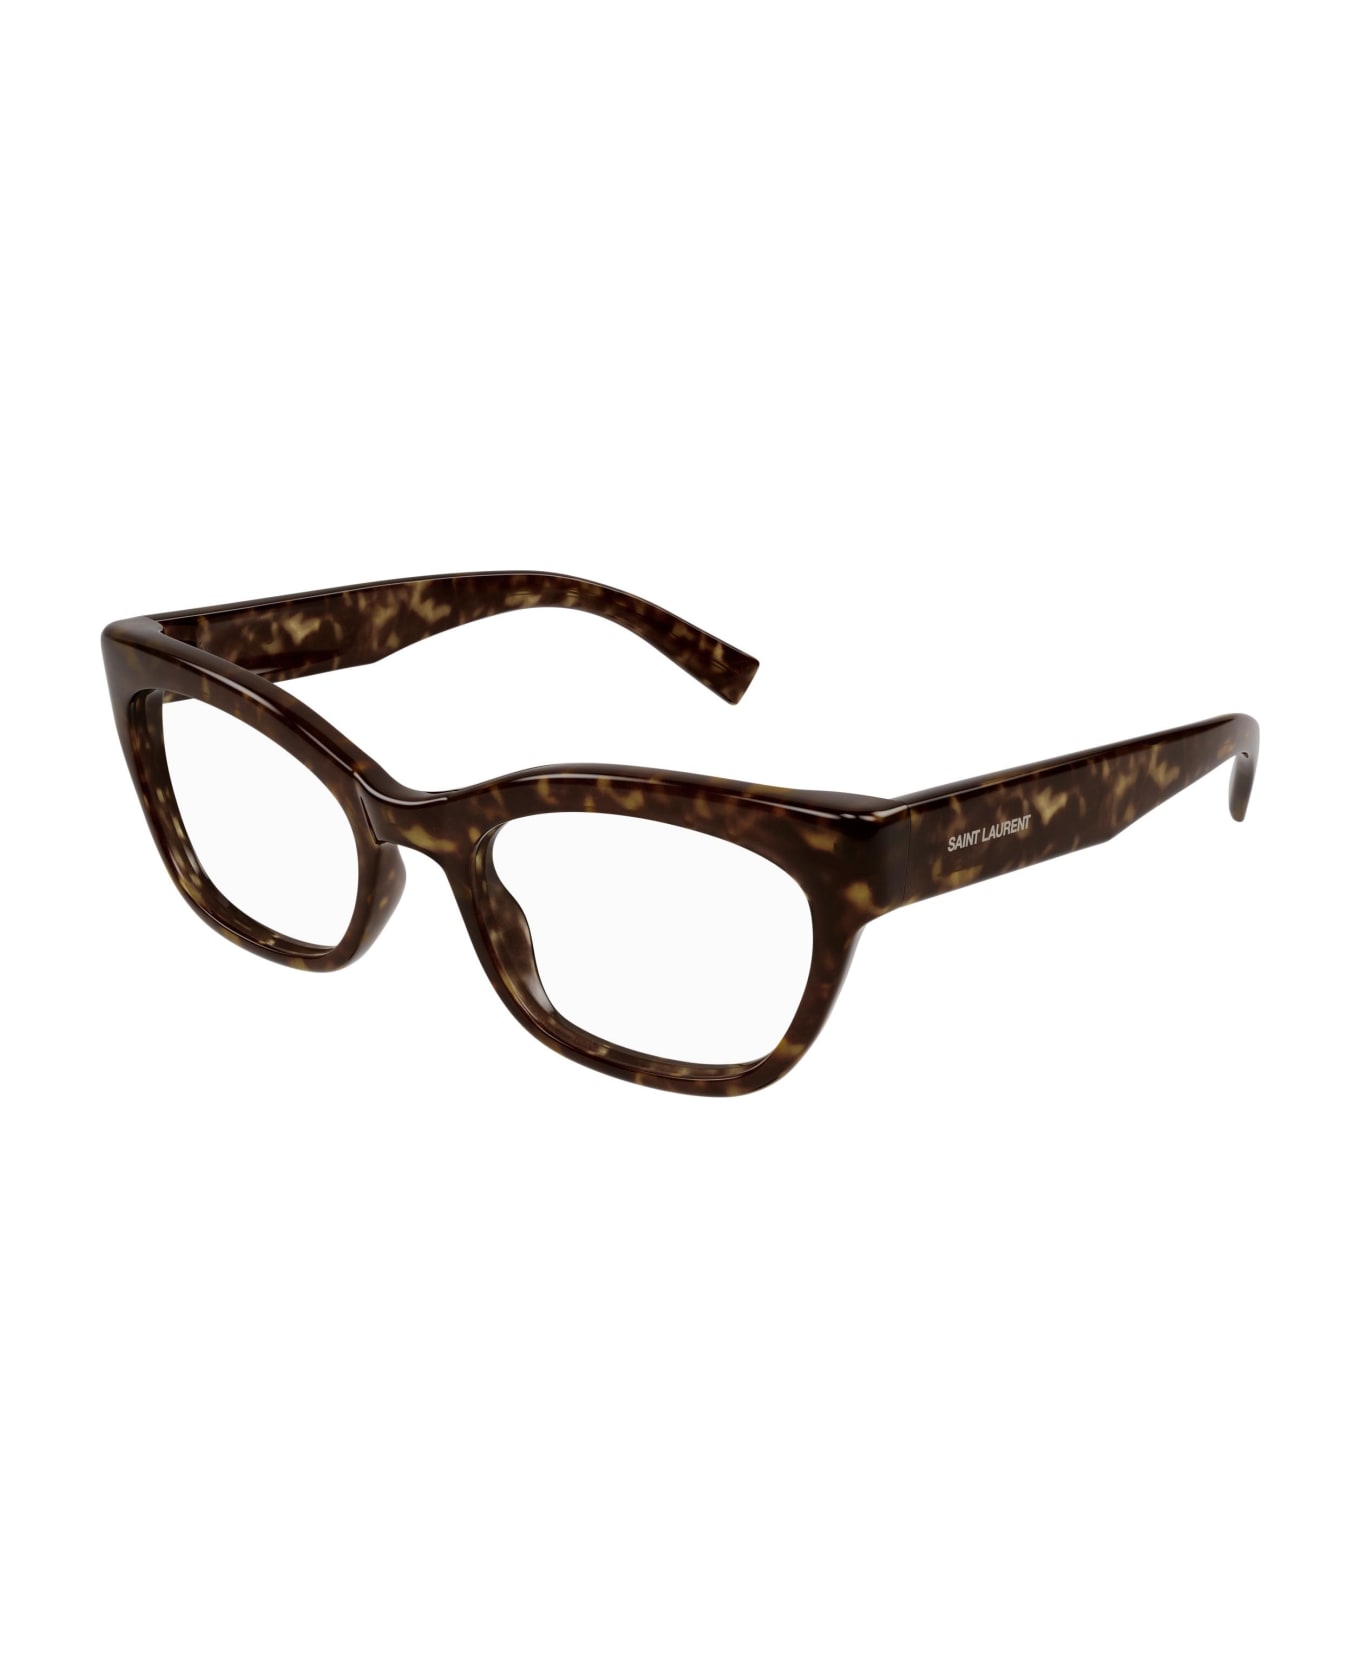 Saint Laurent Eyewear Glasses - Havana